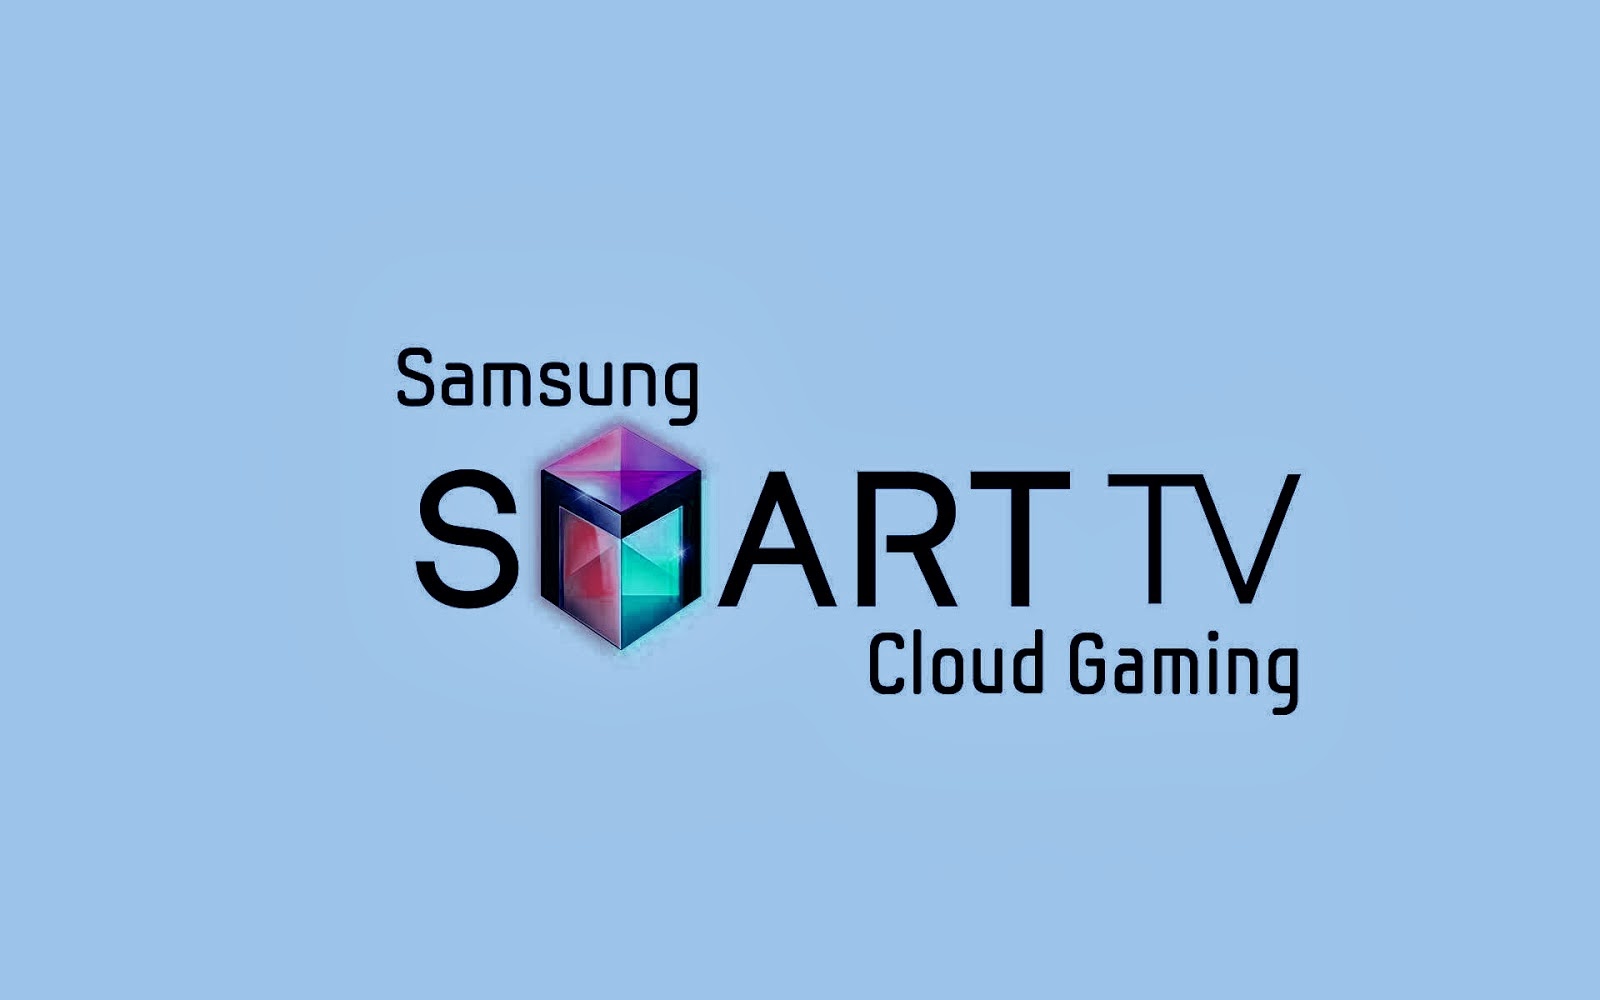 Smart Tv Hd Samsung